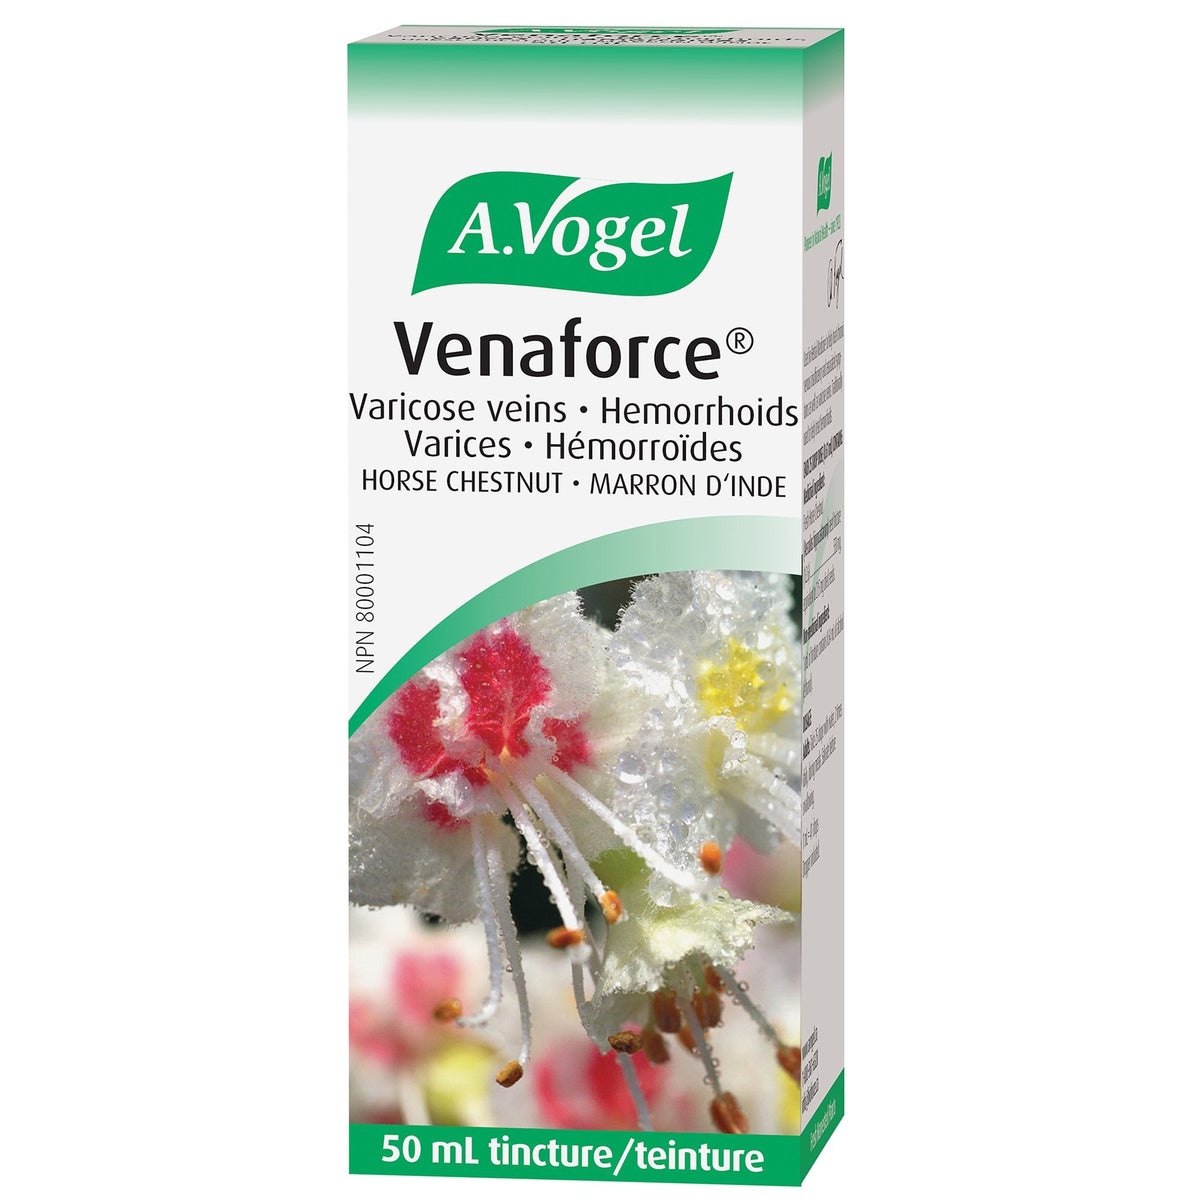 Venaforce - Varicose Veins and Hemorrhoids 50mL - A.Vogel Canada